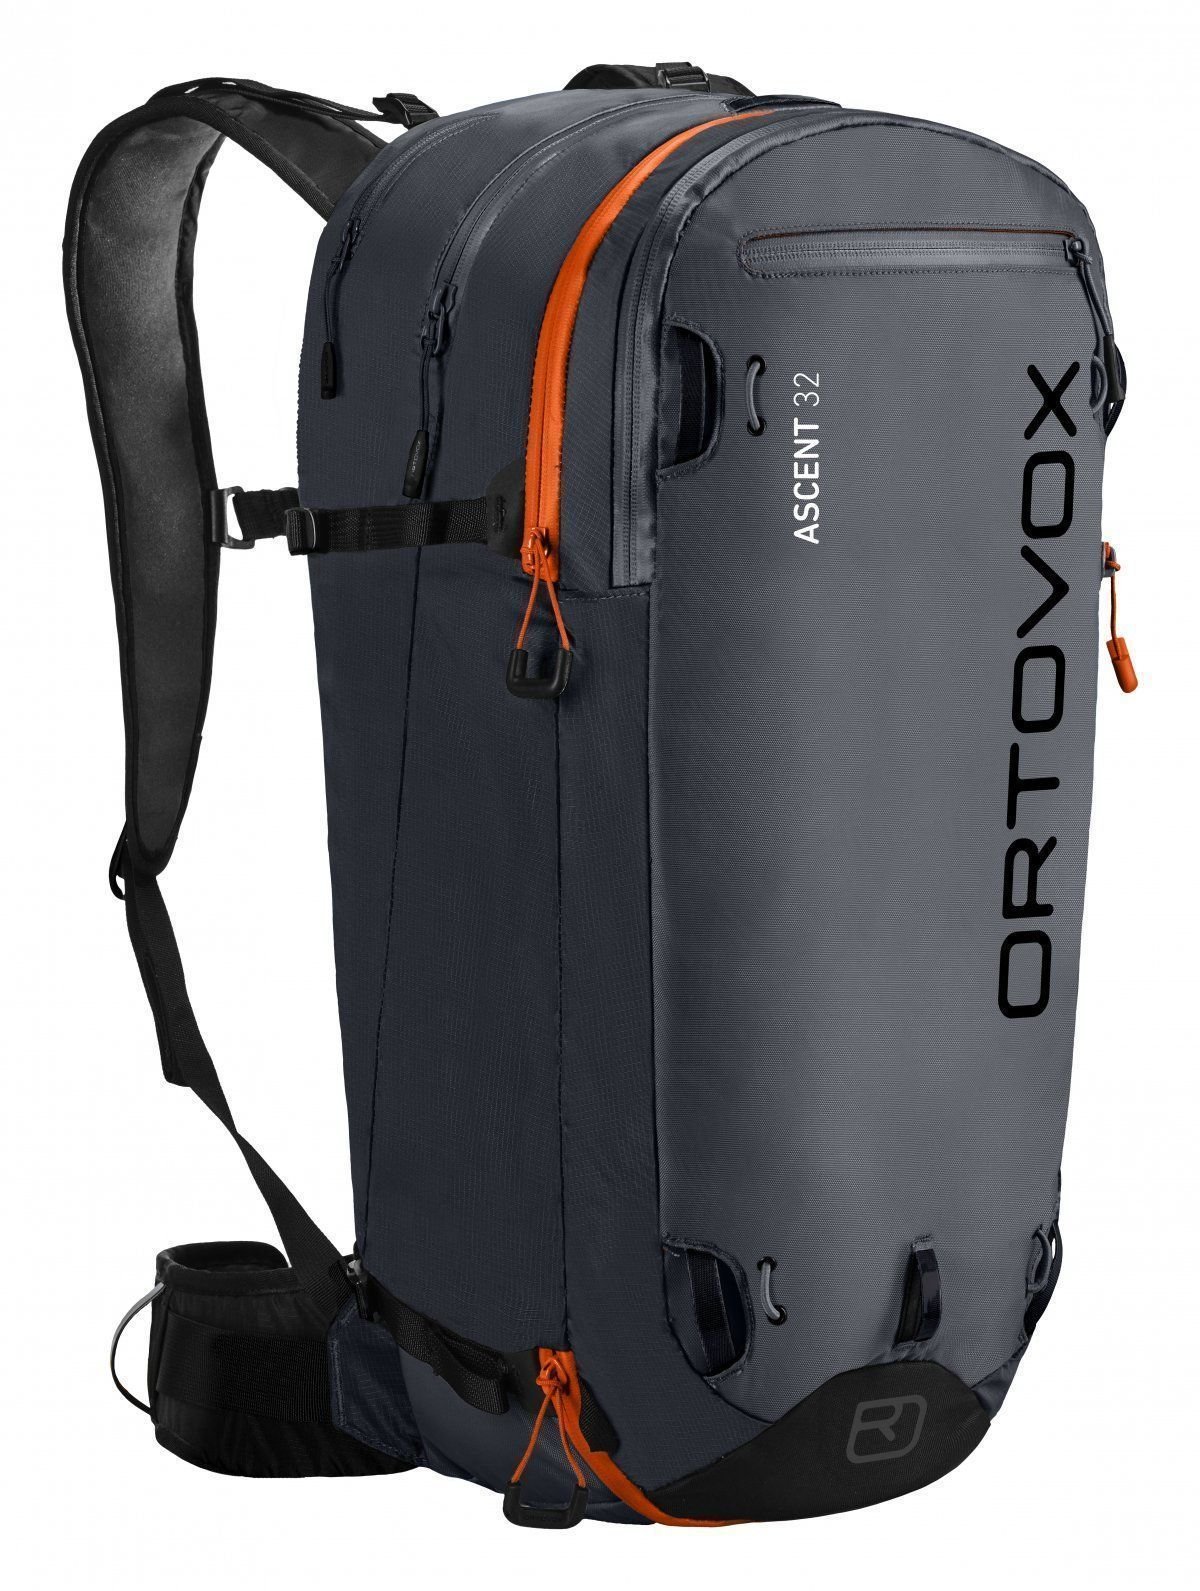 Ski Travel Bag Ortovox Ascent 32 Black Anthracite Ski Travel Bag